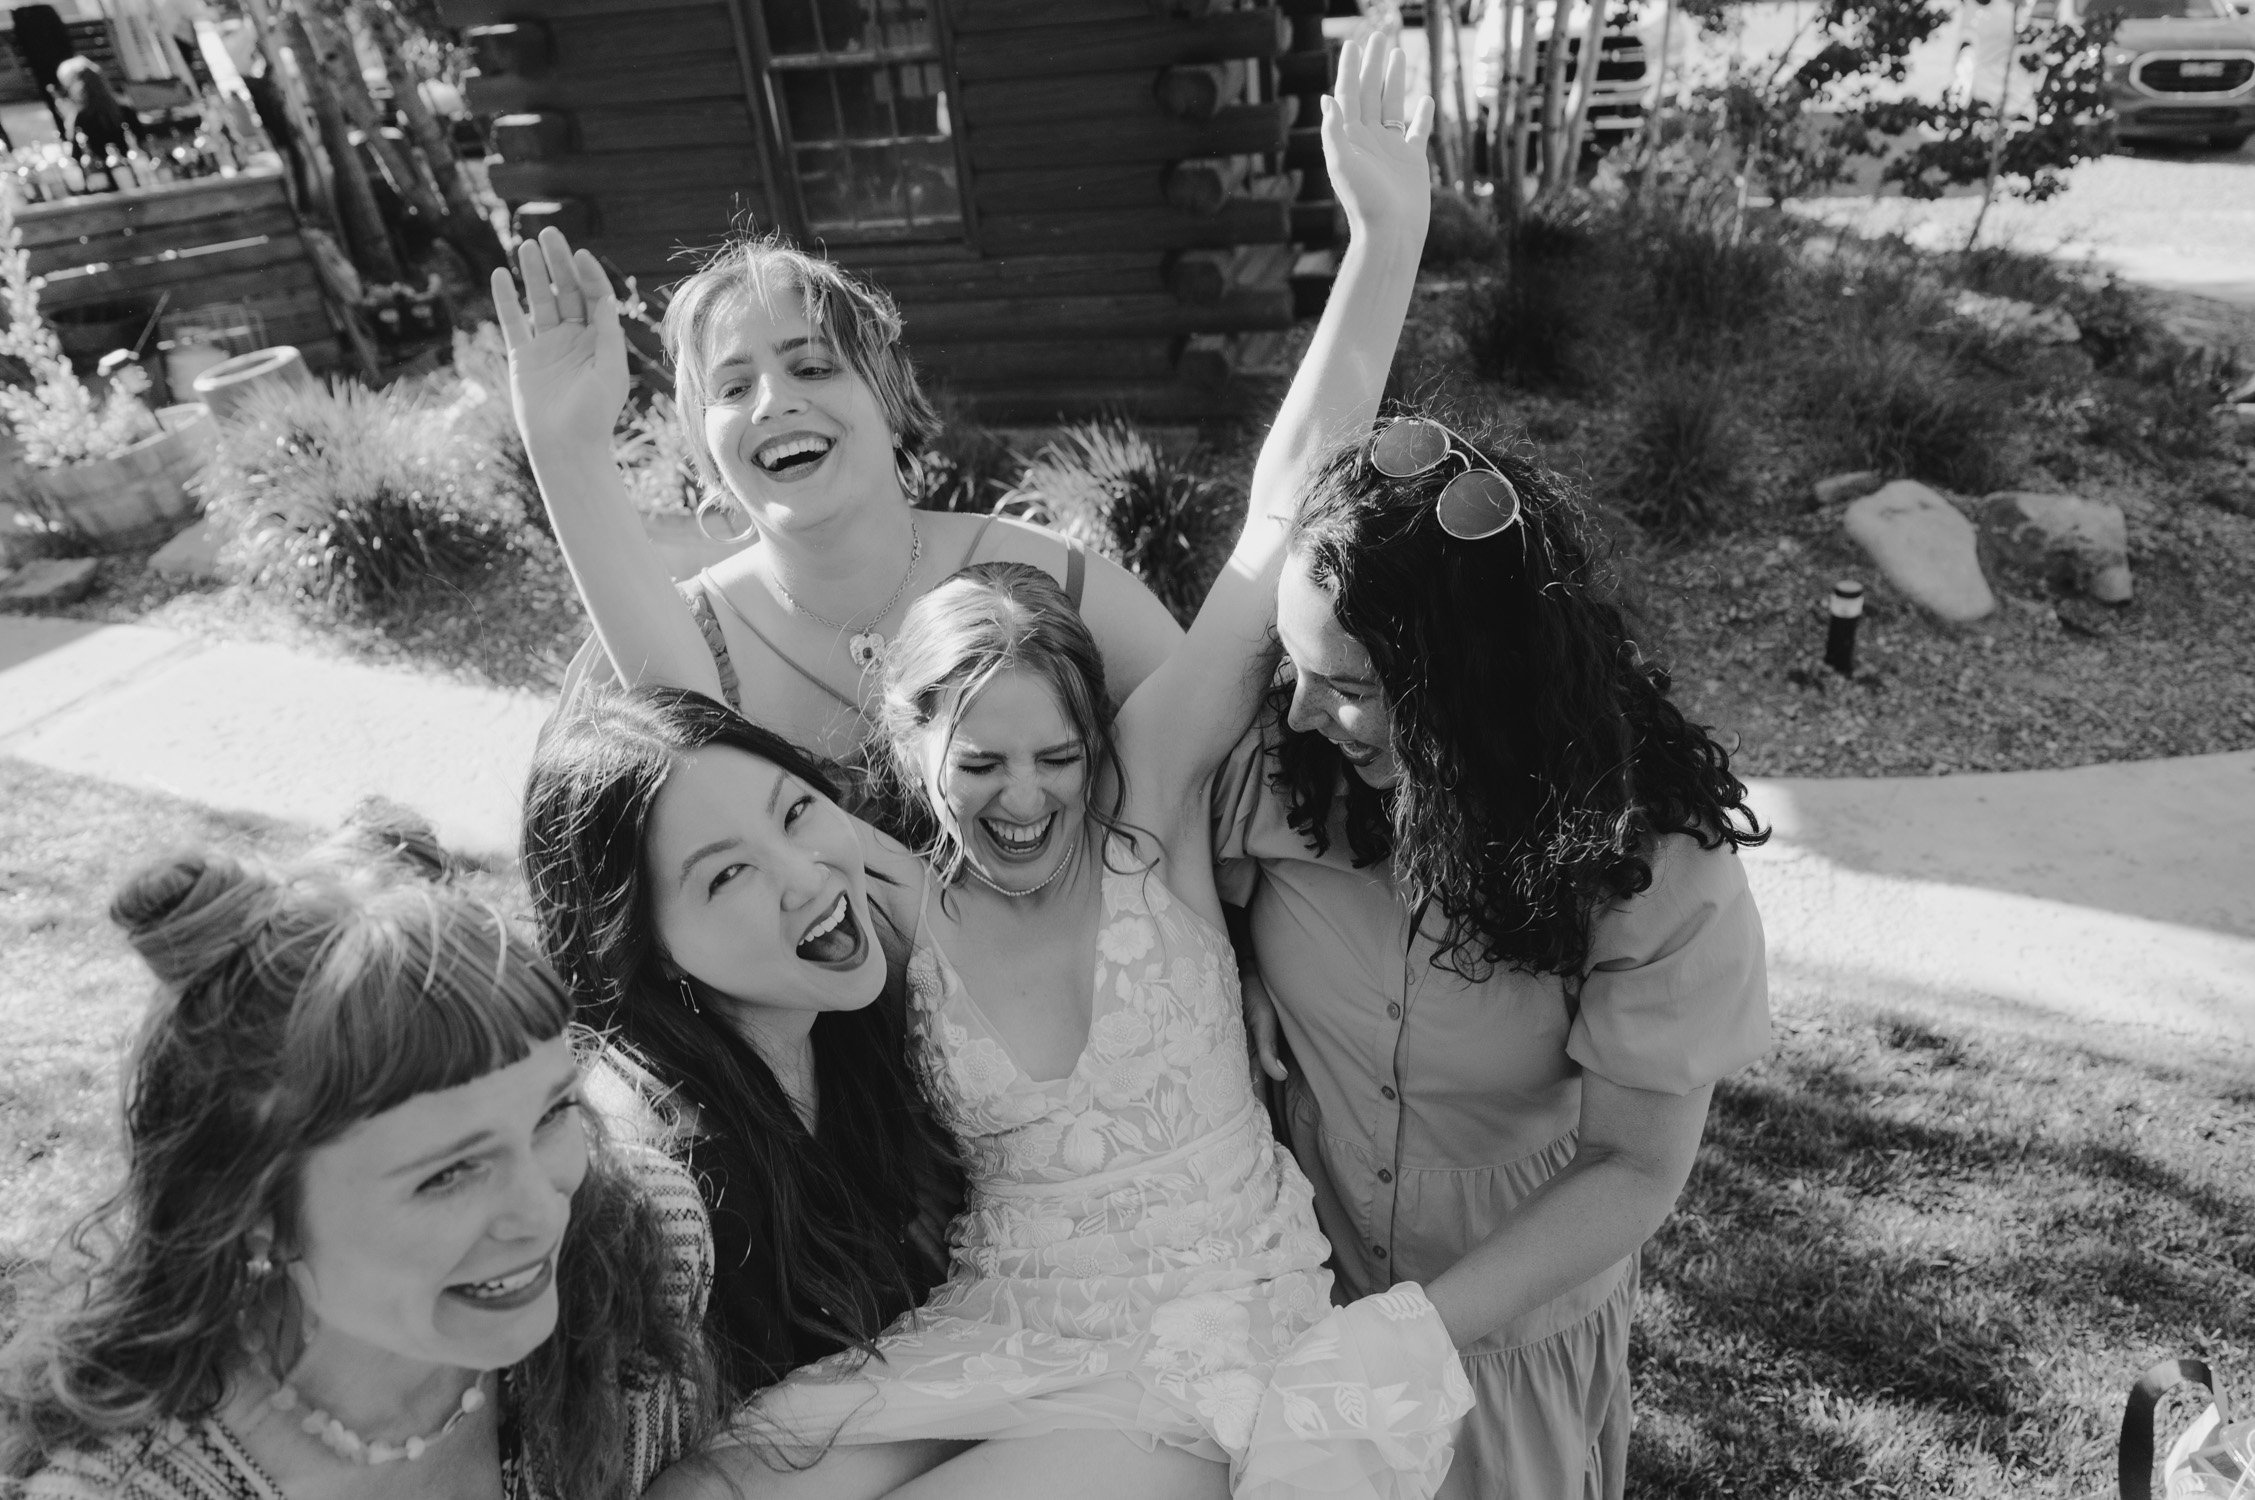 Desolation wilderness hotel wedding, photo of bride with her friends celebrating on her wedding day